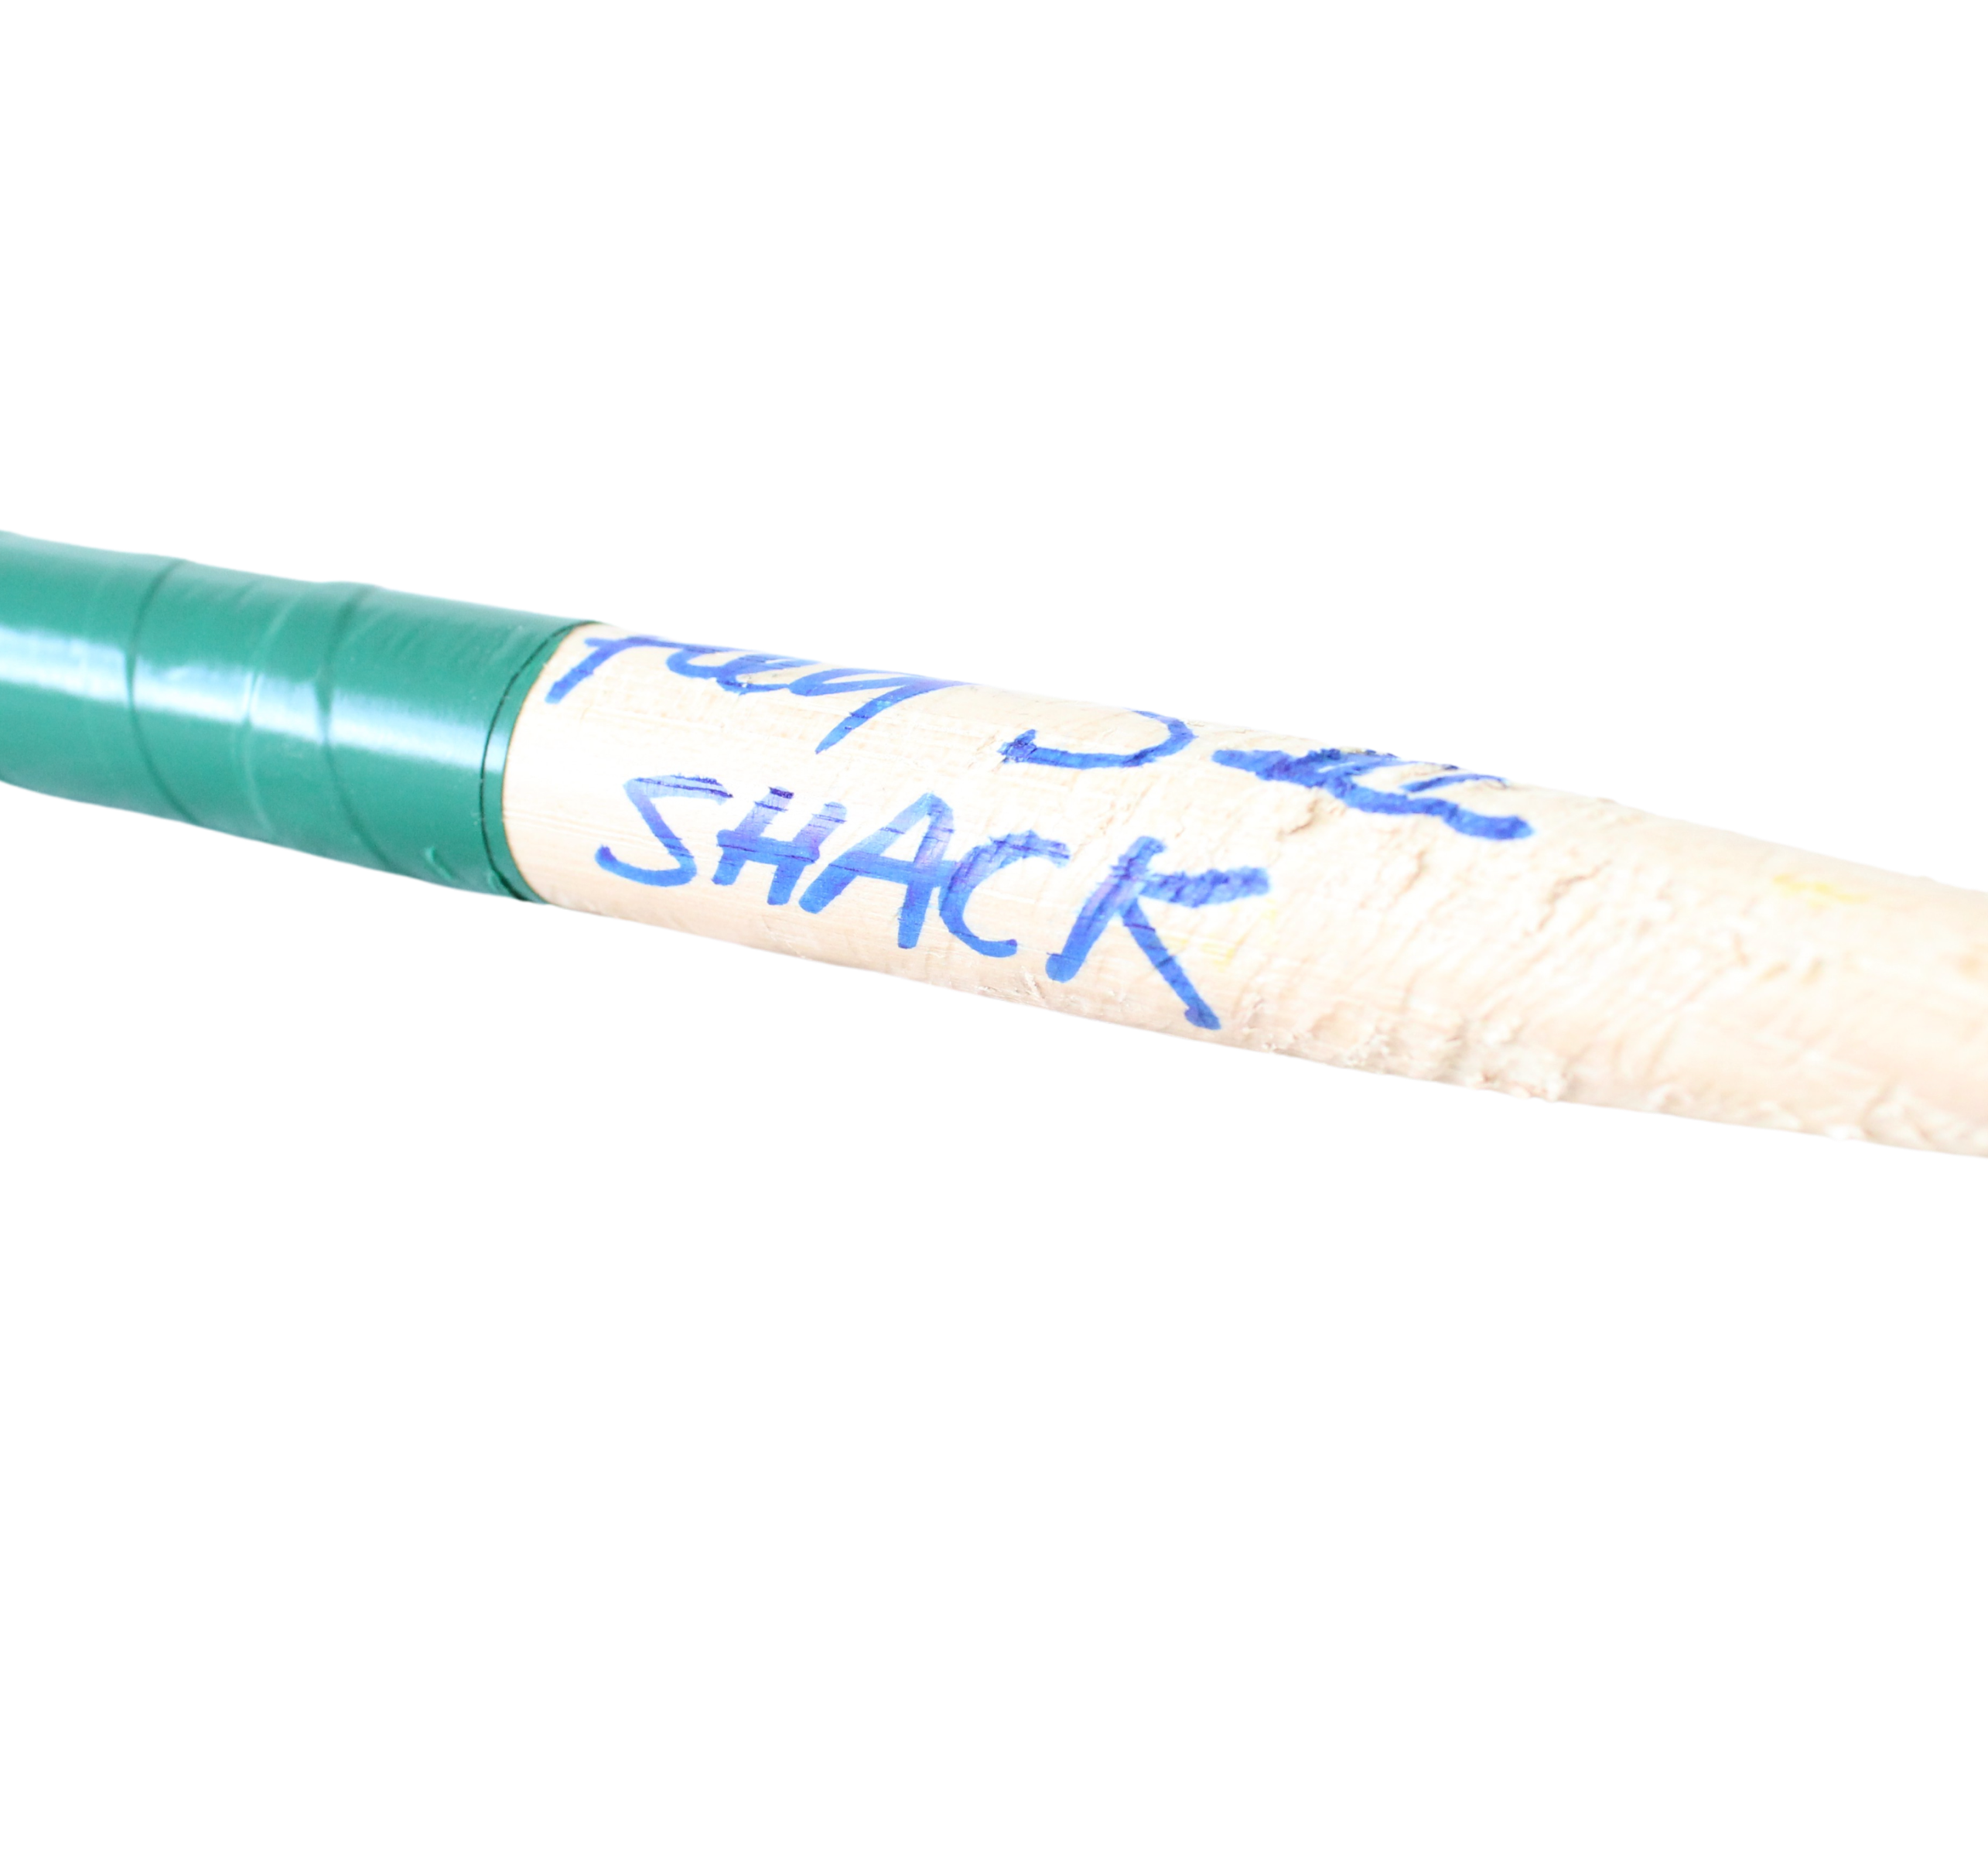 Fred Schneider's Signed Drumstick used for "Love Shack"